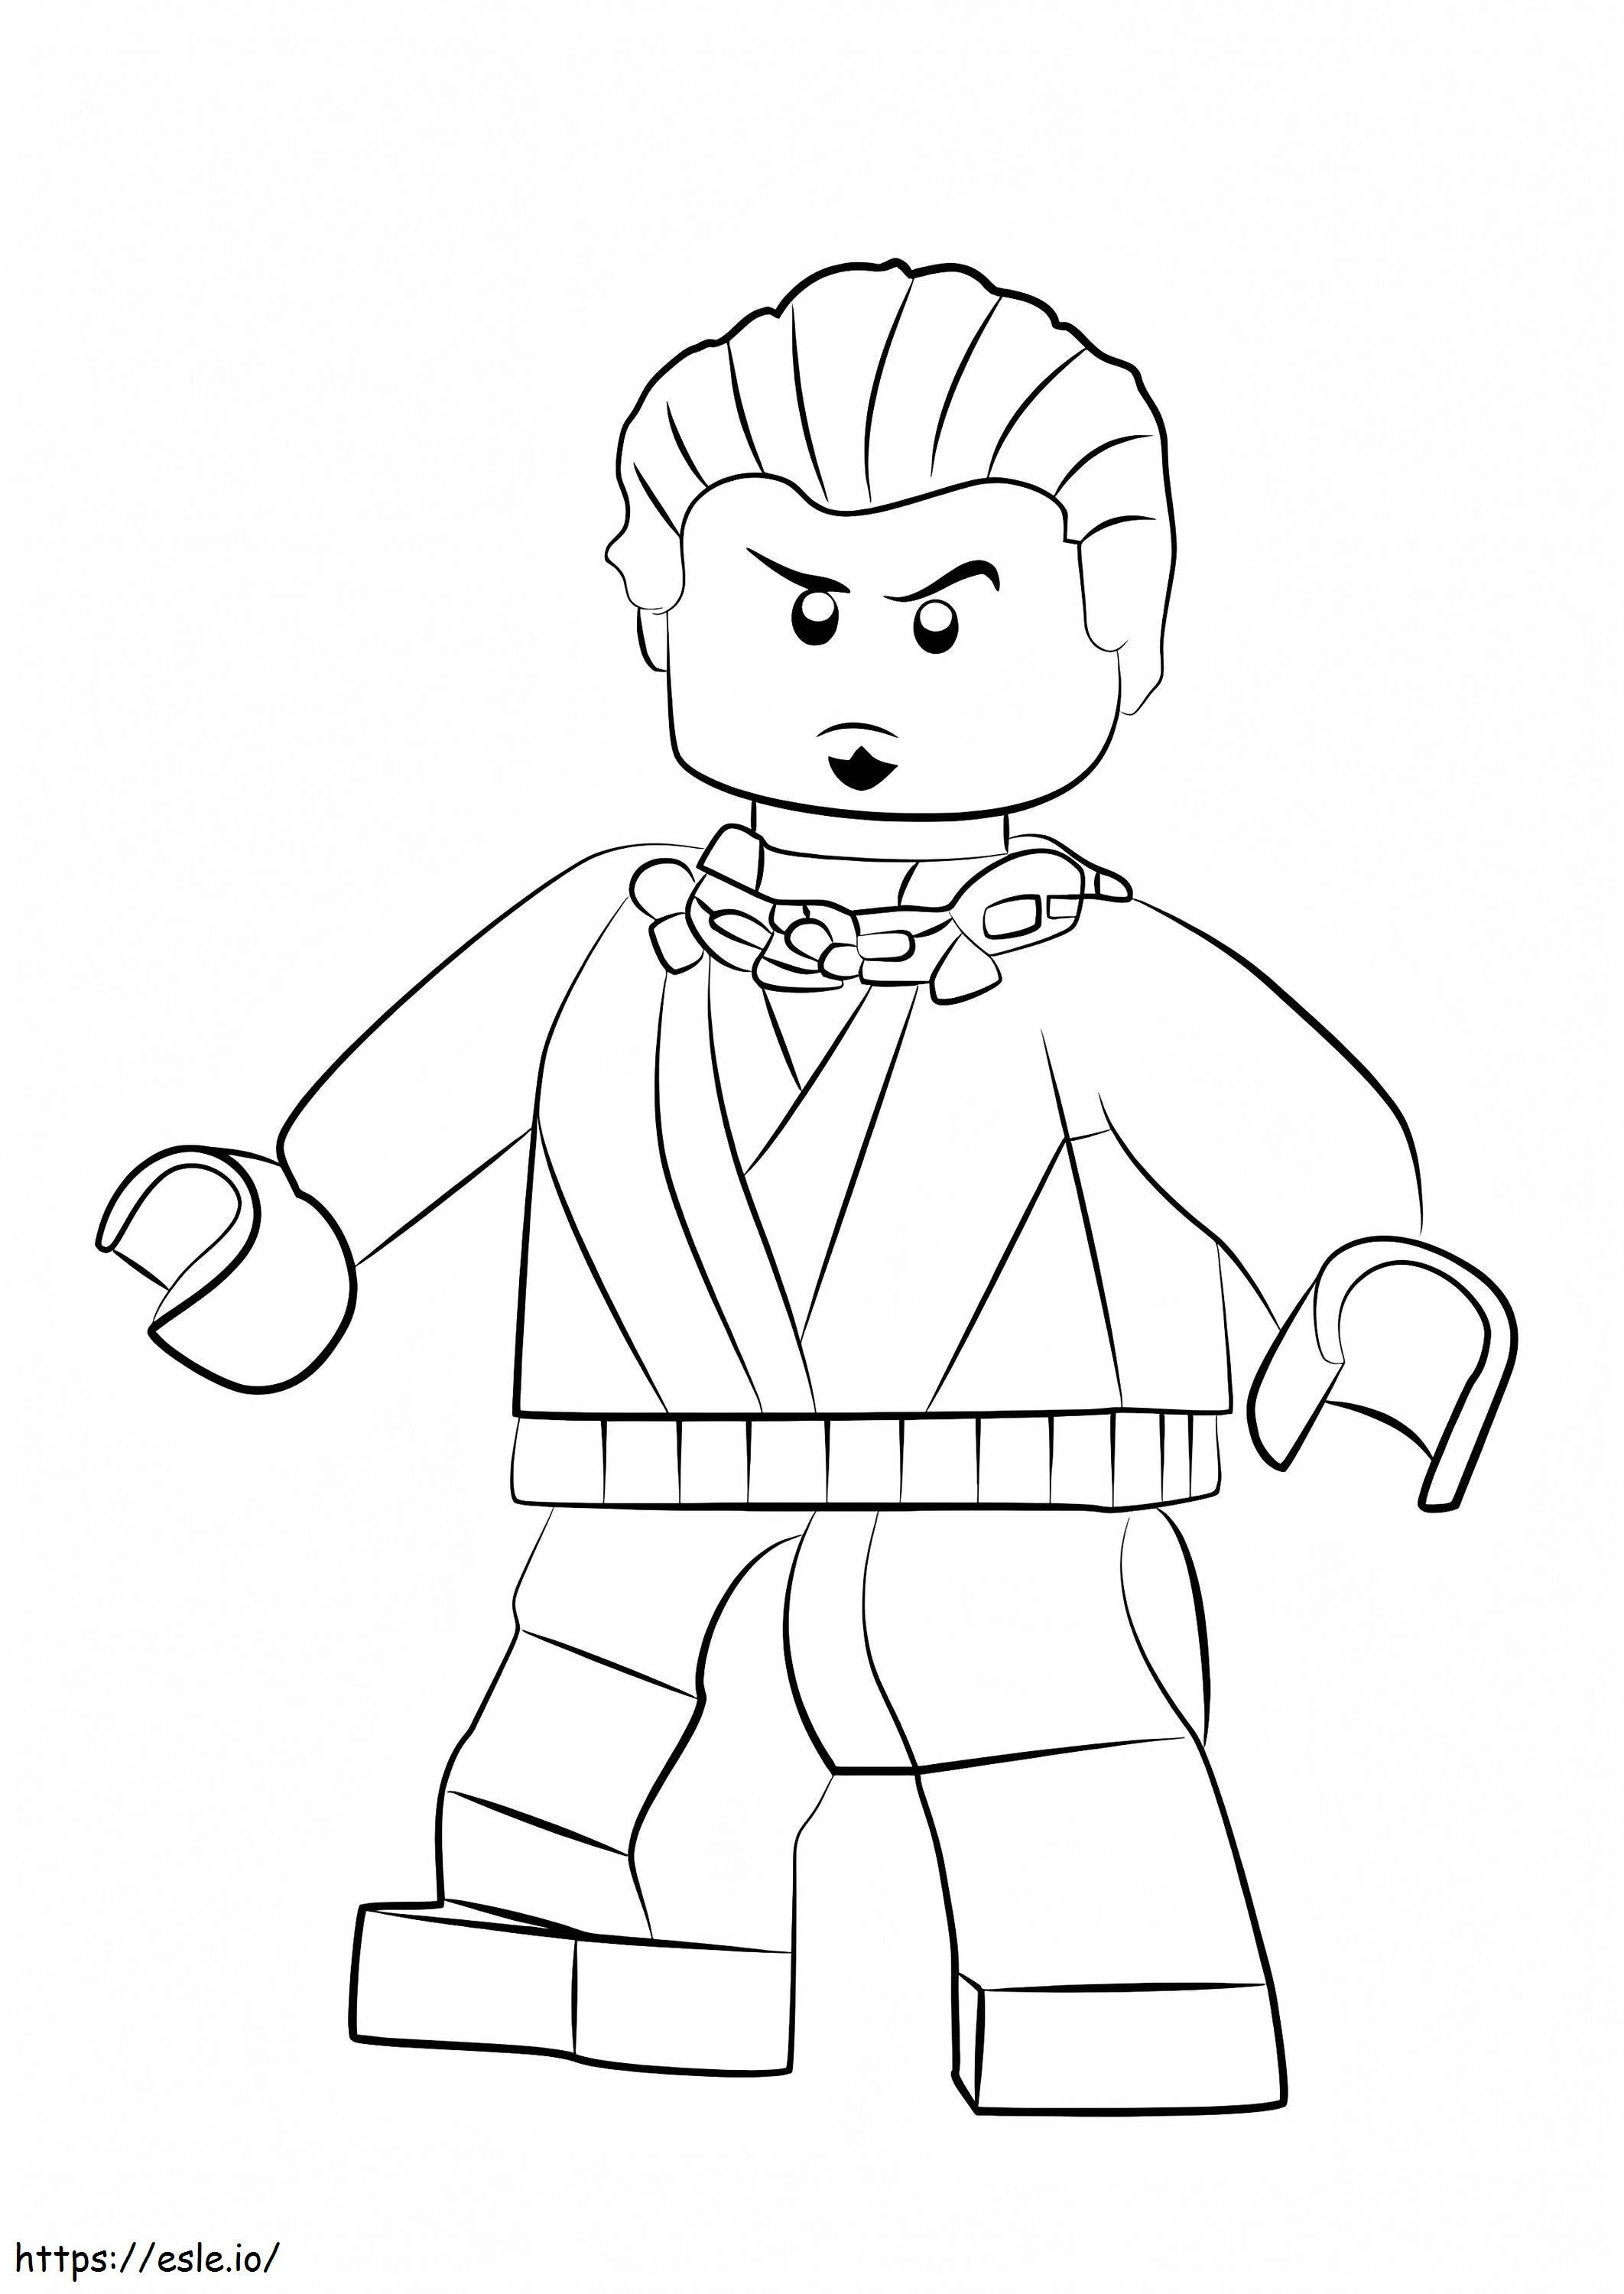 Lego Ninjago Neuro coloring page